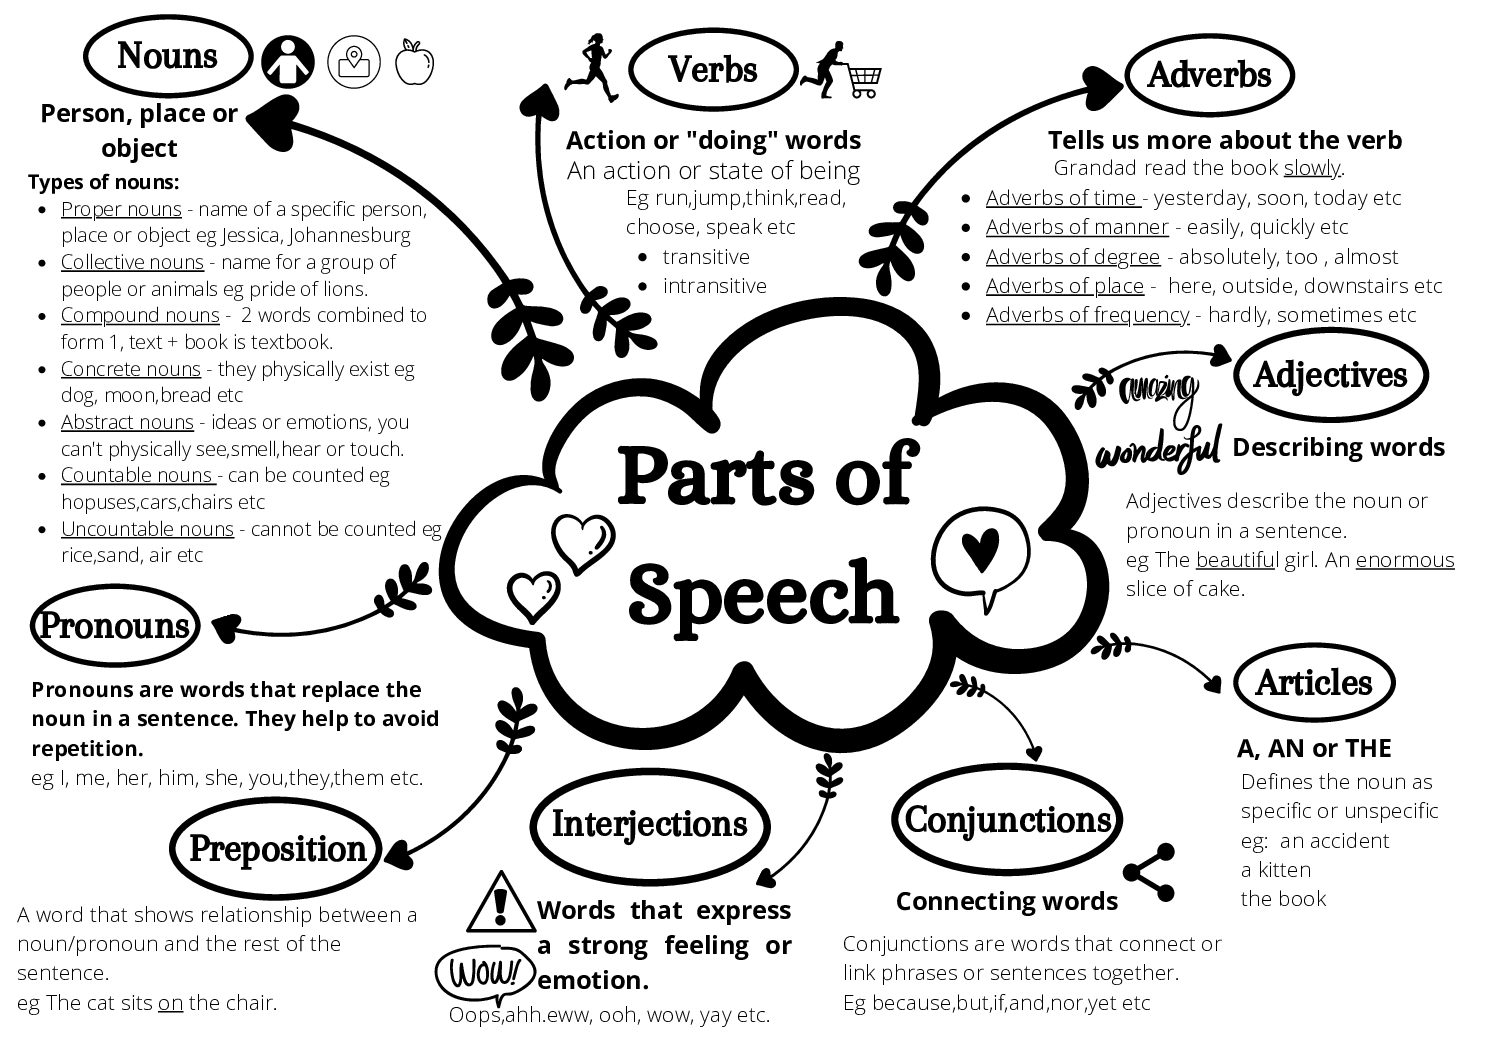 summary of the parts of speech